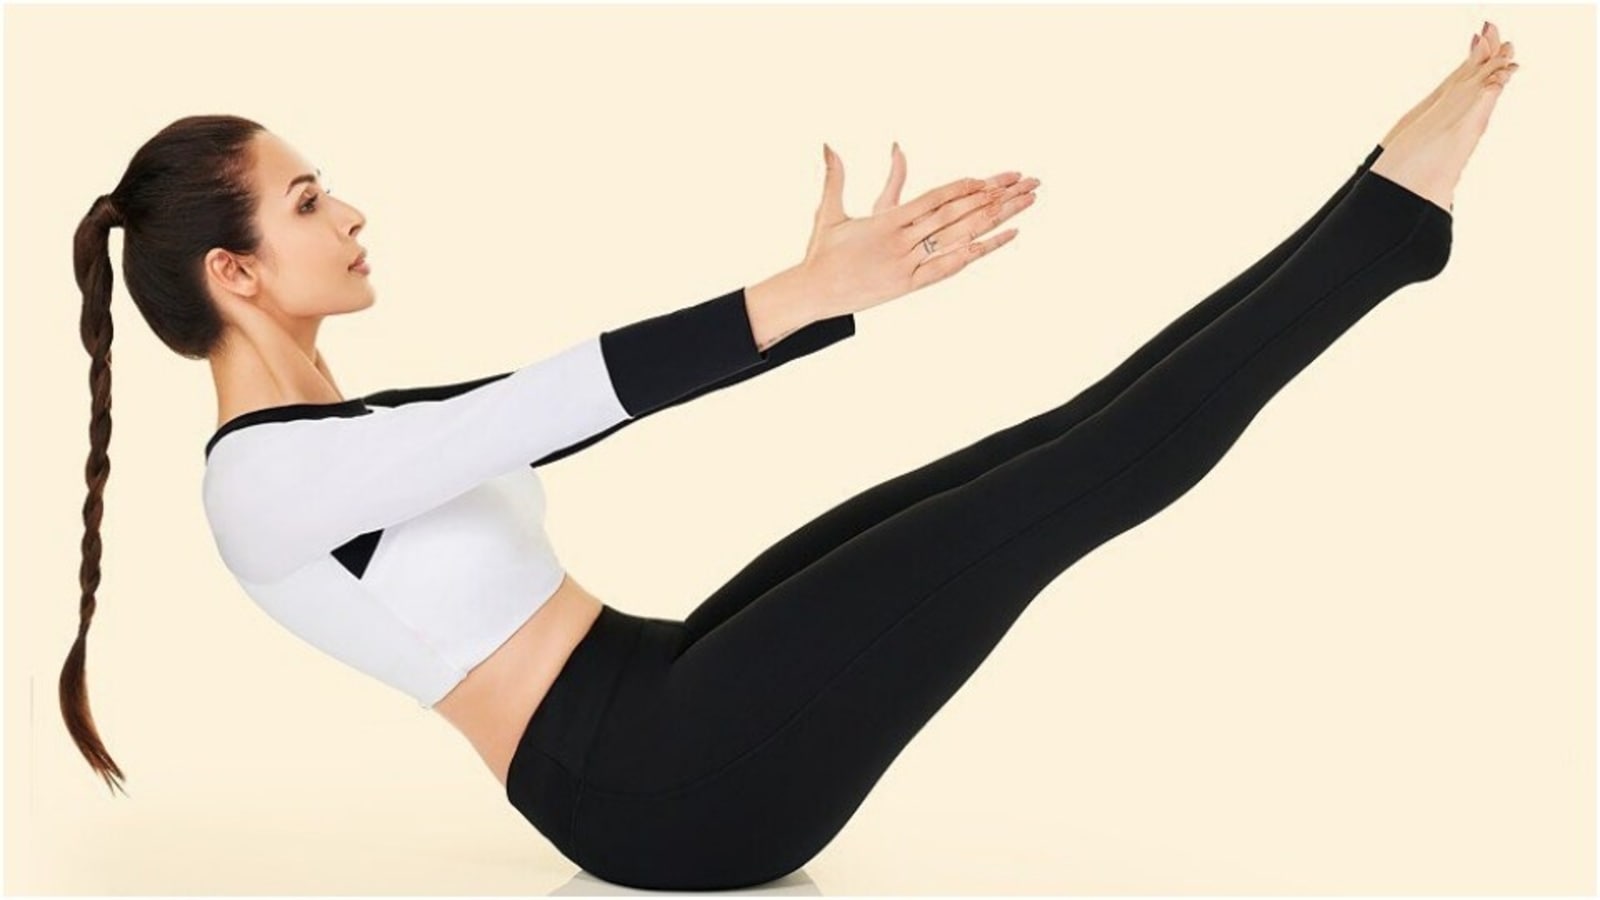 Malaika Arora does Naukasana to improve self-confidence, strengthen core  muscles | Health - Hindustan Times